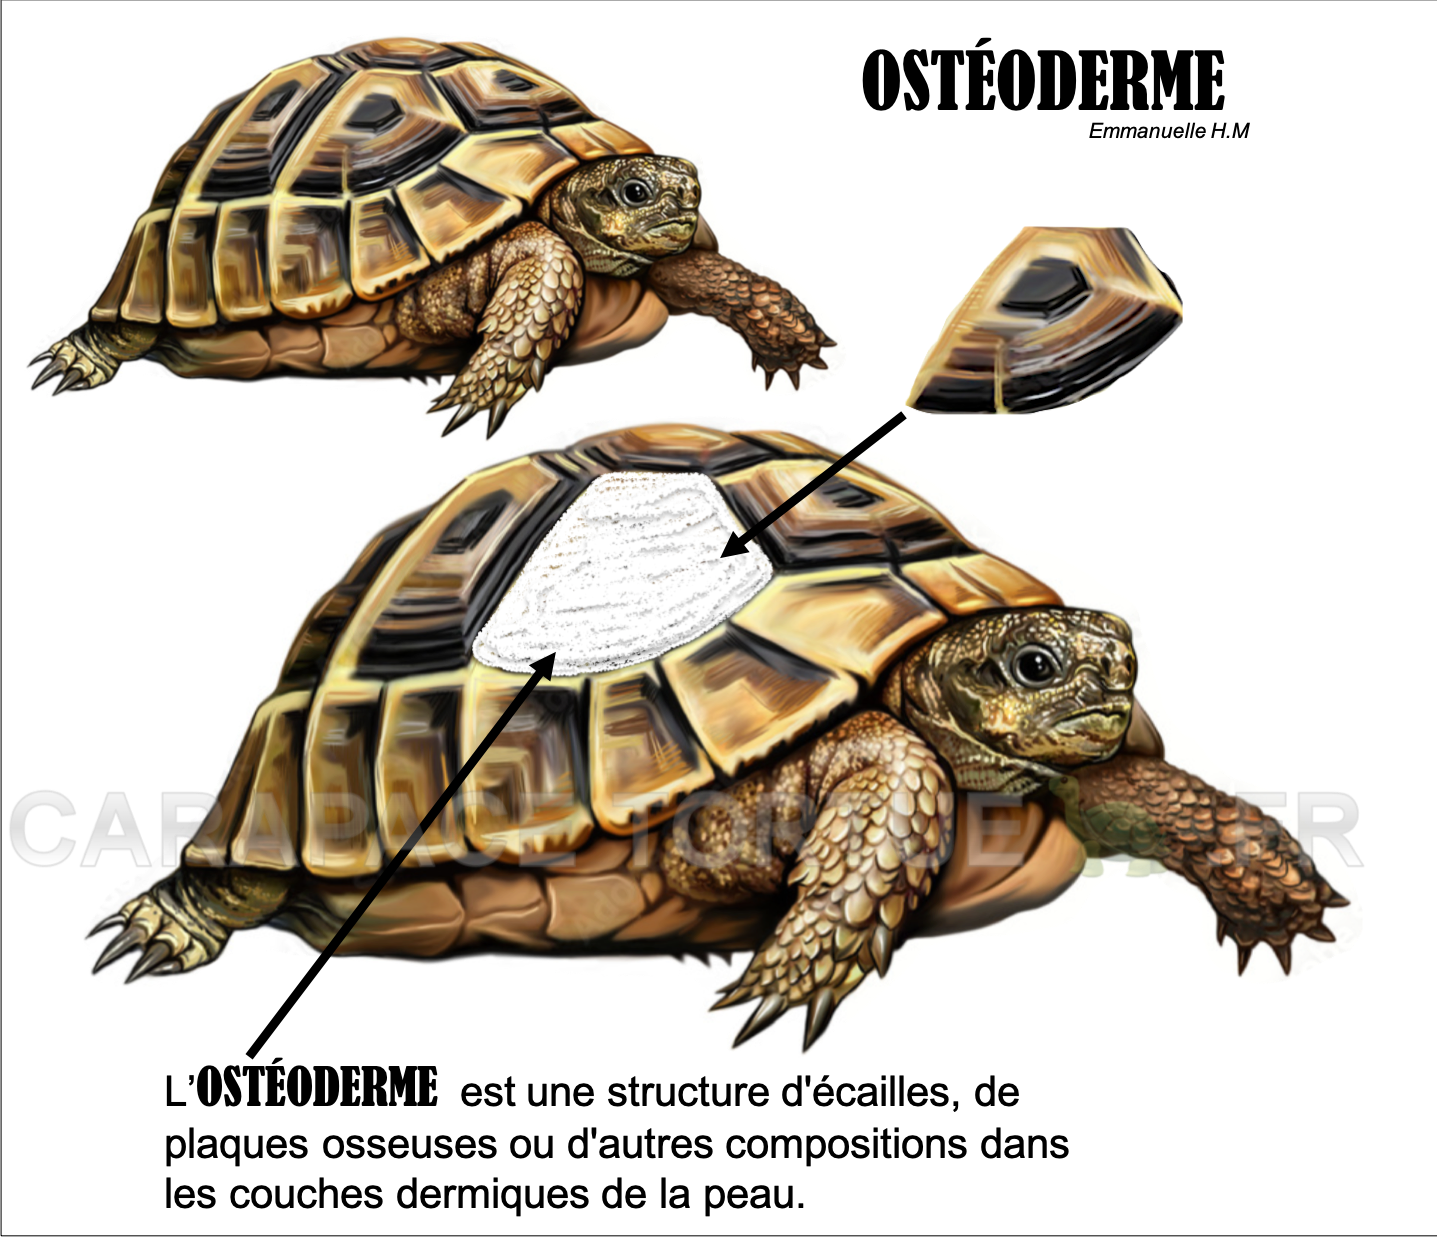 Osteoderme 3